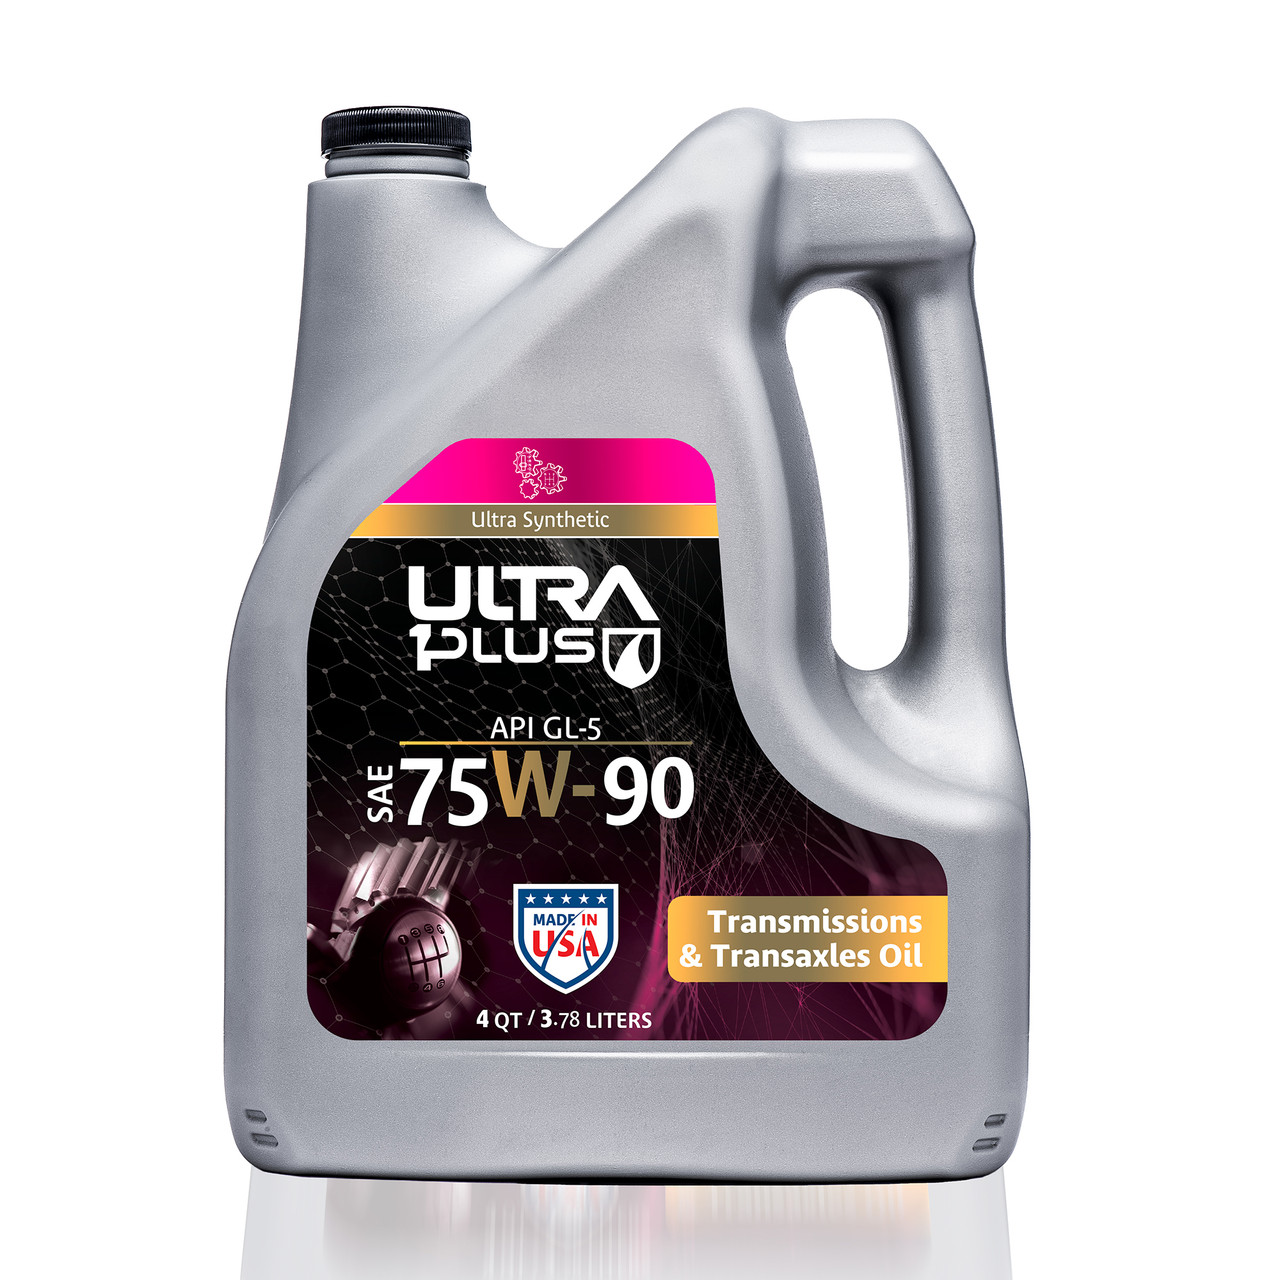 Ultra1Plus  Synthetic Gear Oil, API GL-5